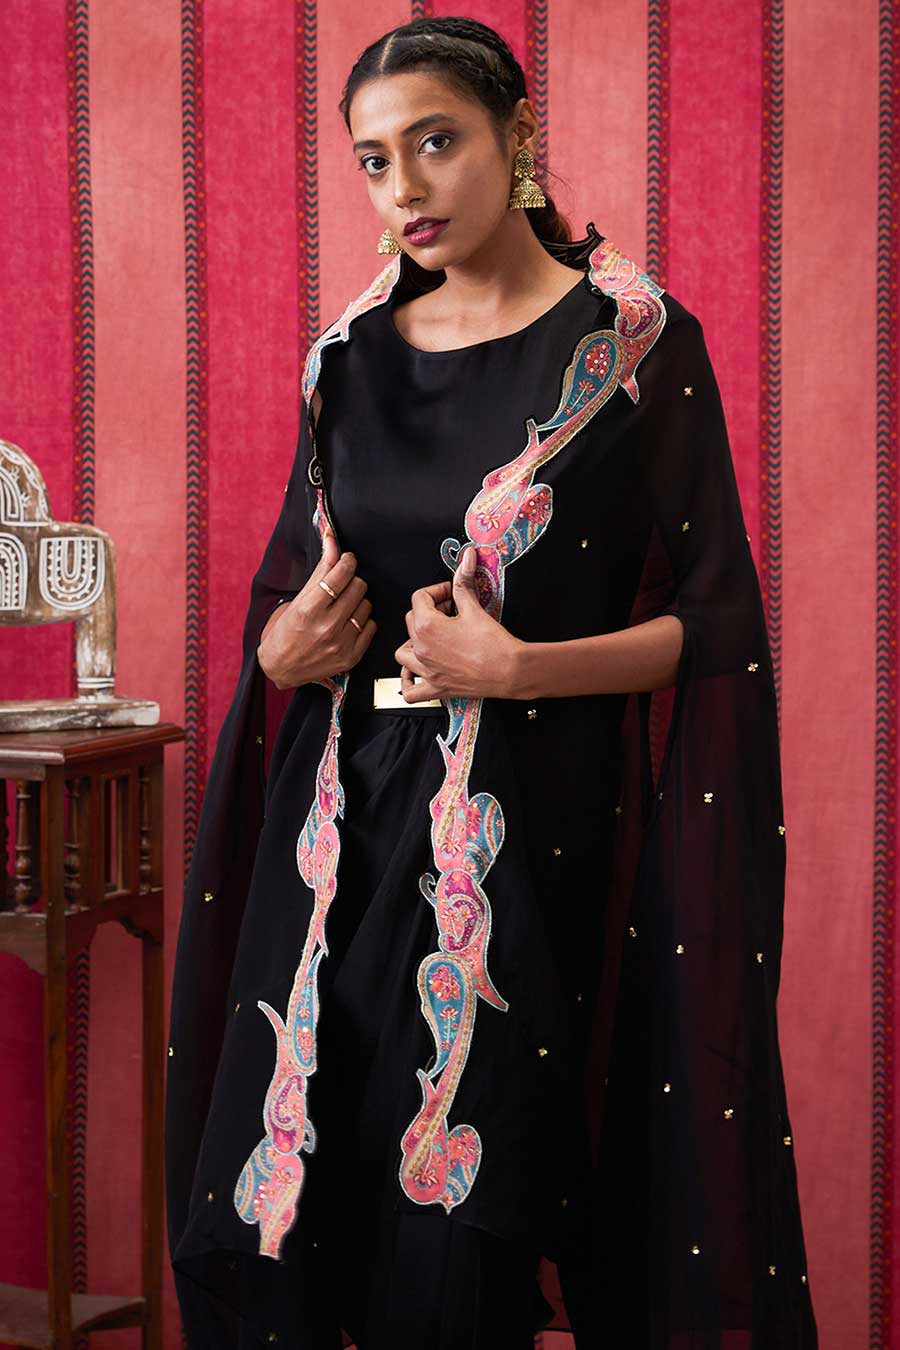 Black Qala Drape Dress with Applique Cape Set